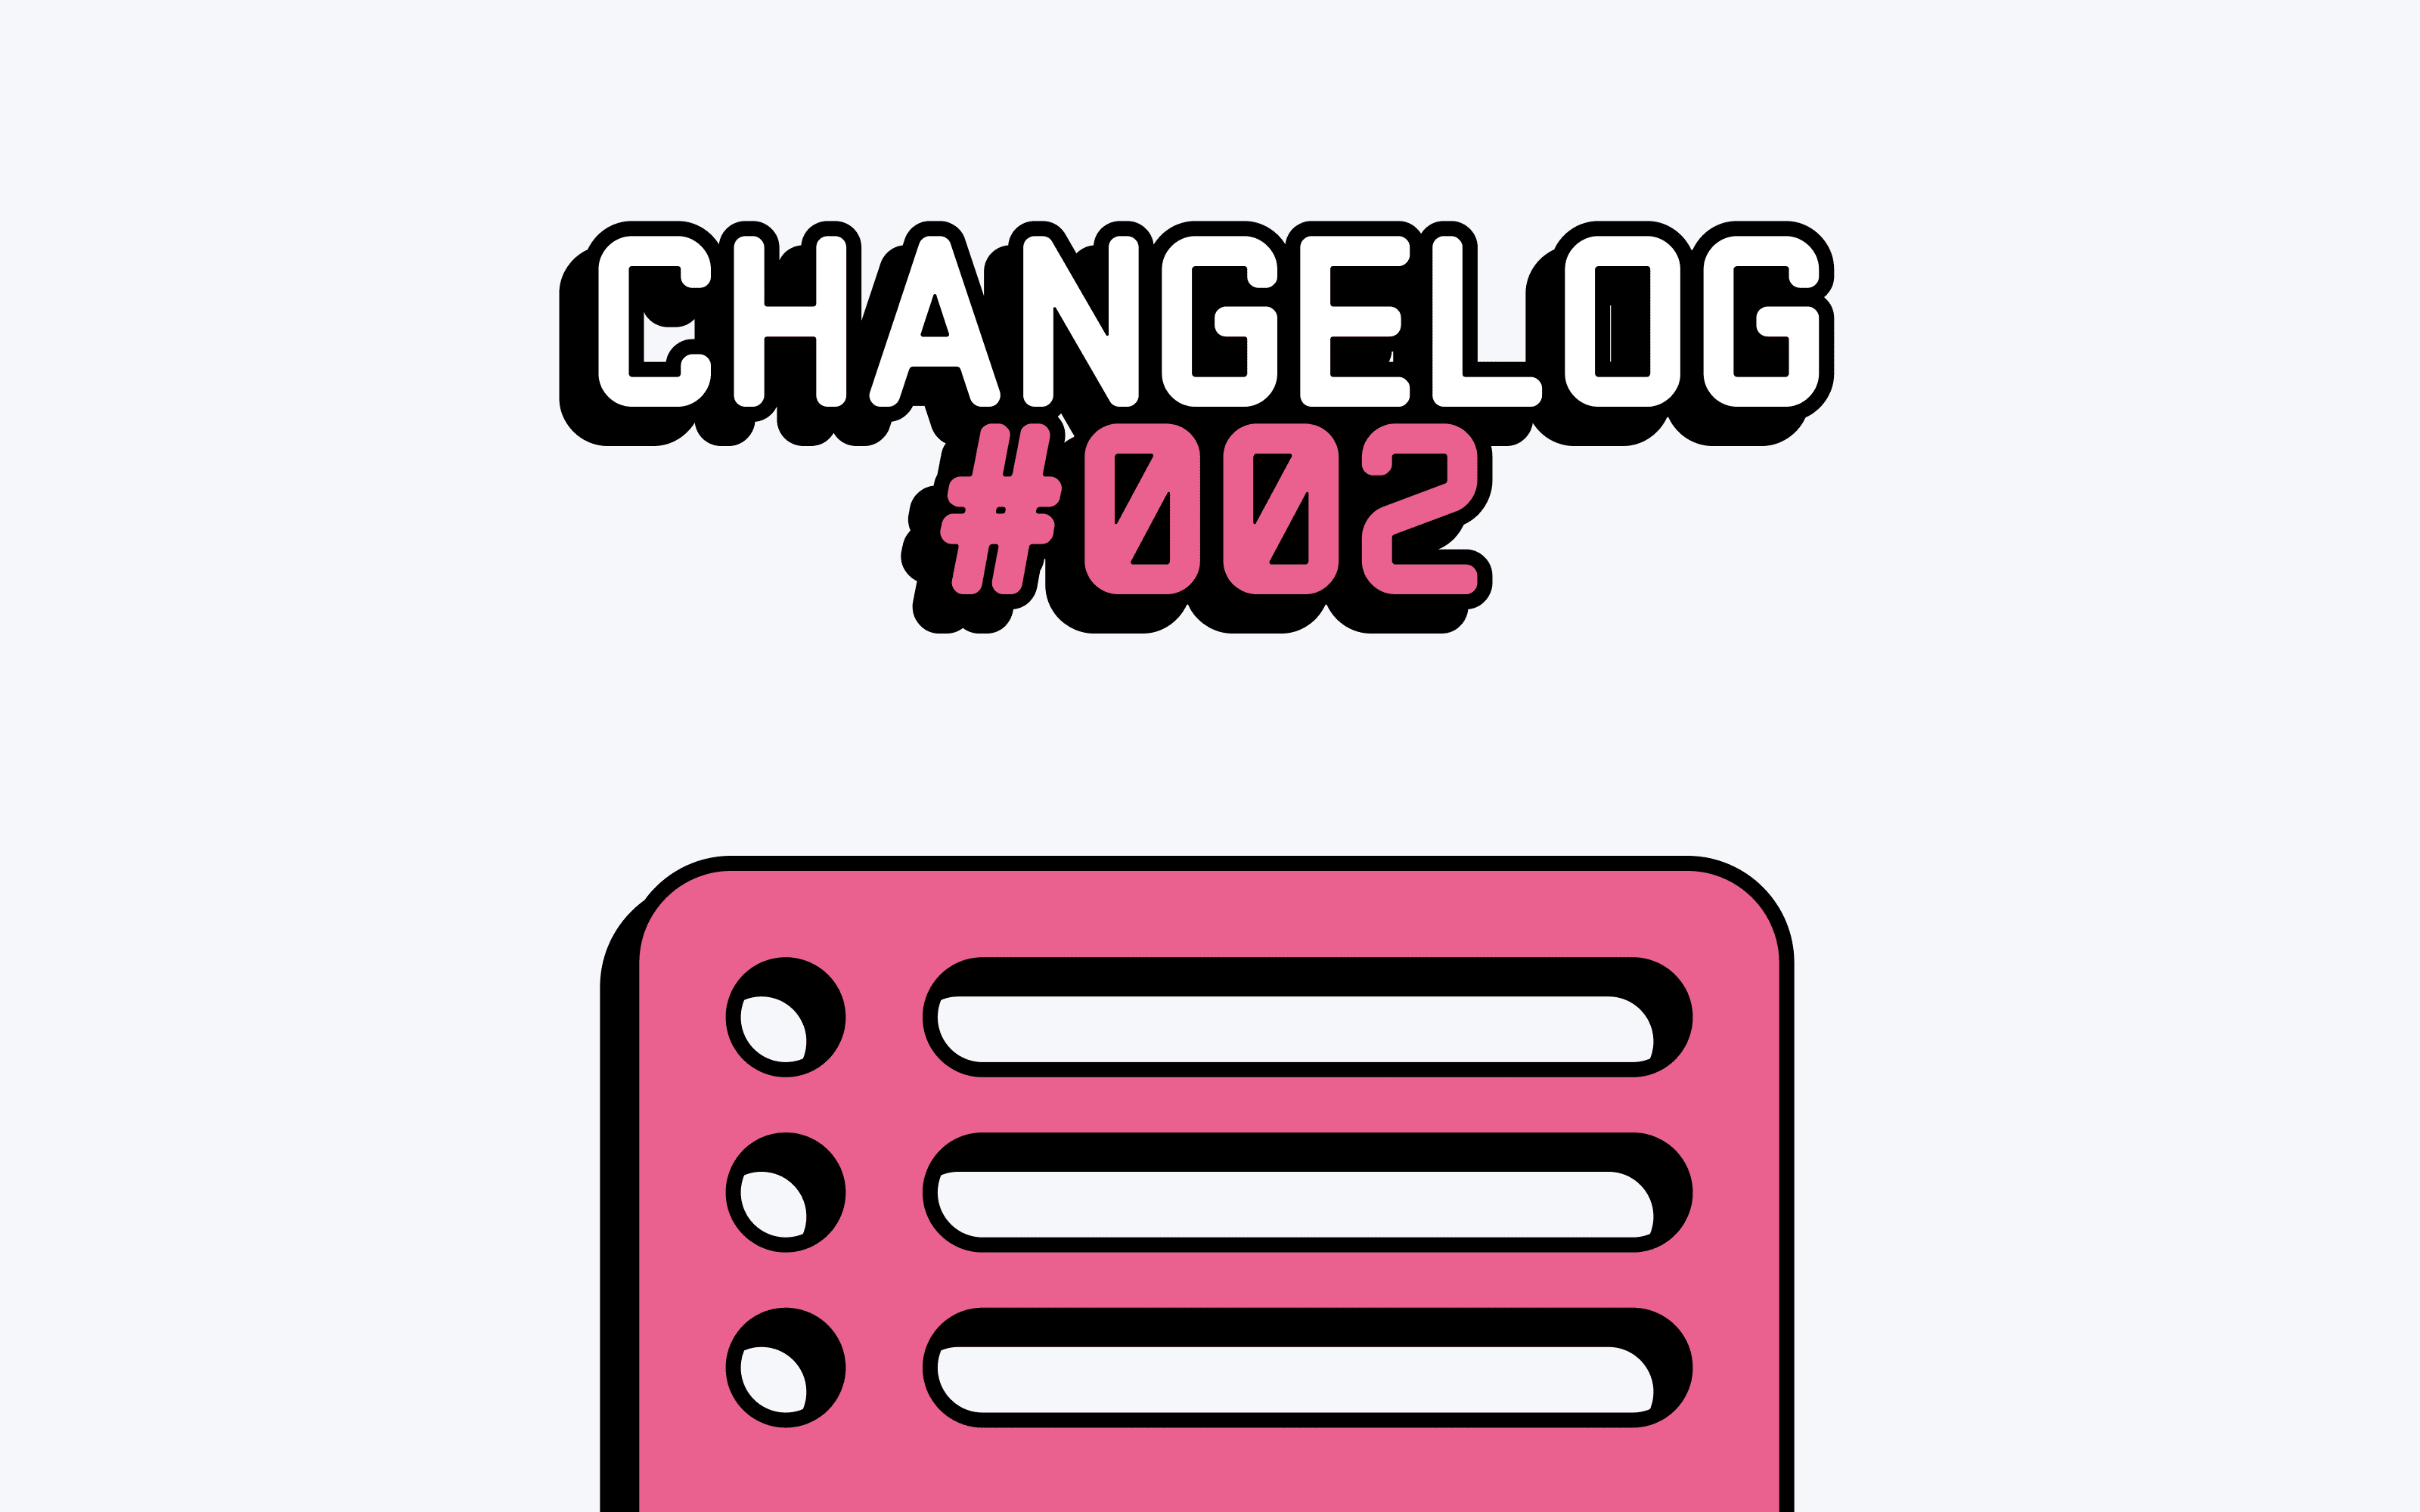 Changelog #002